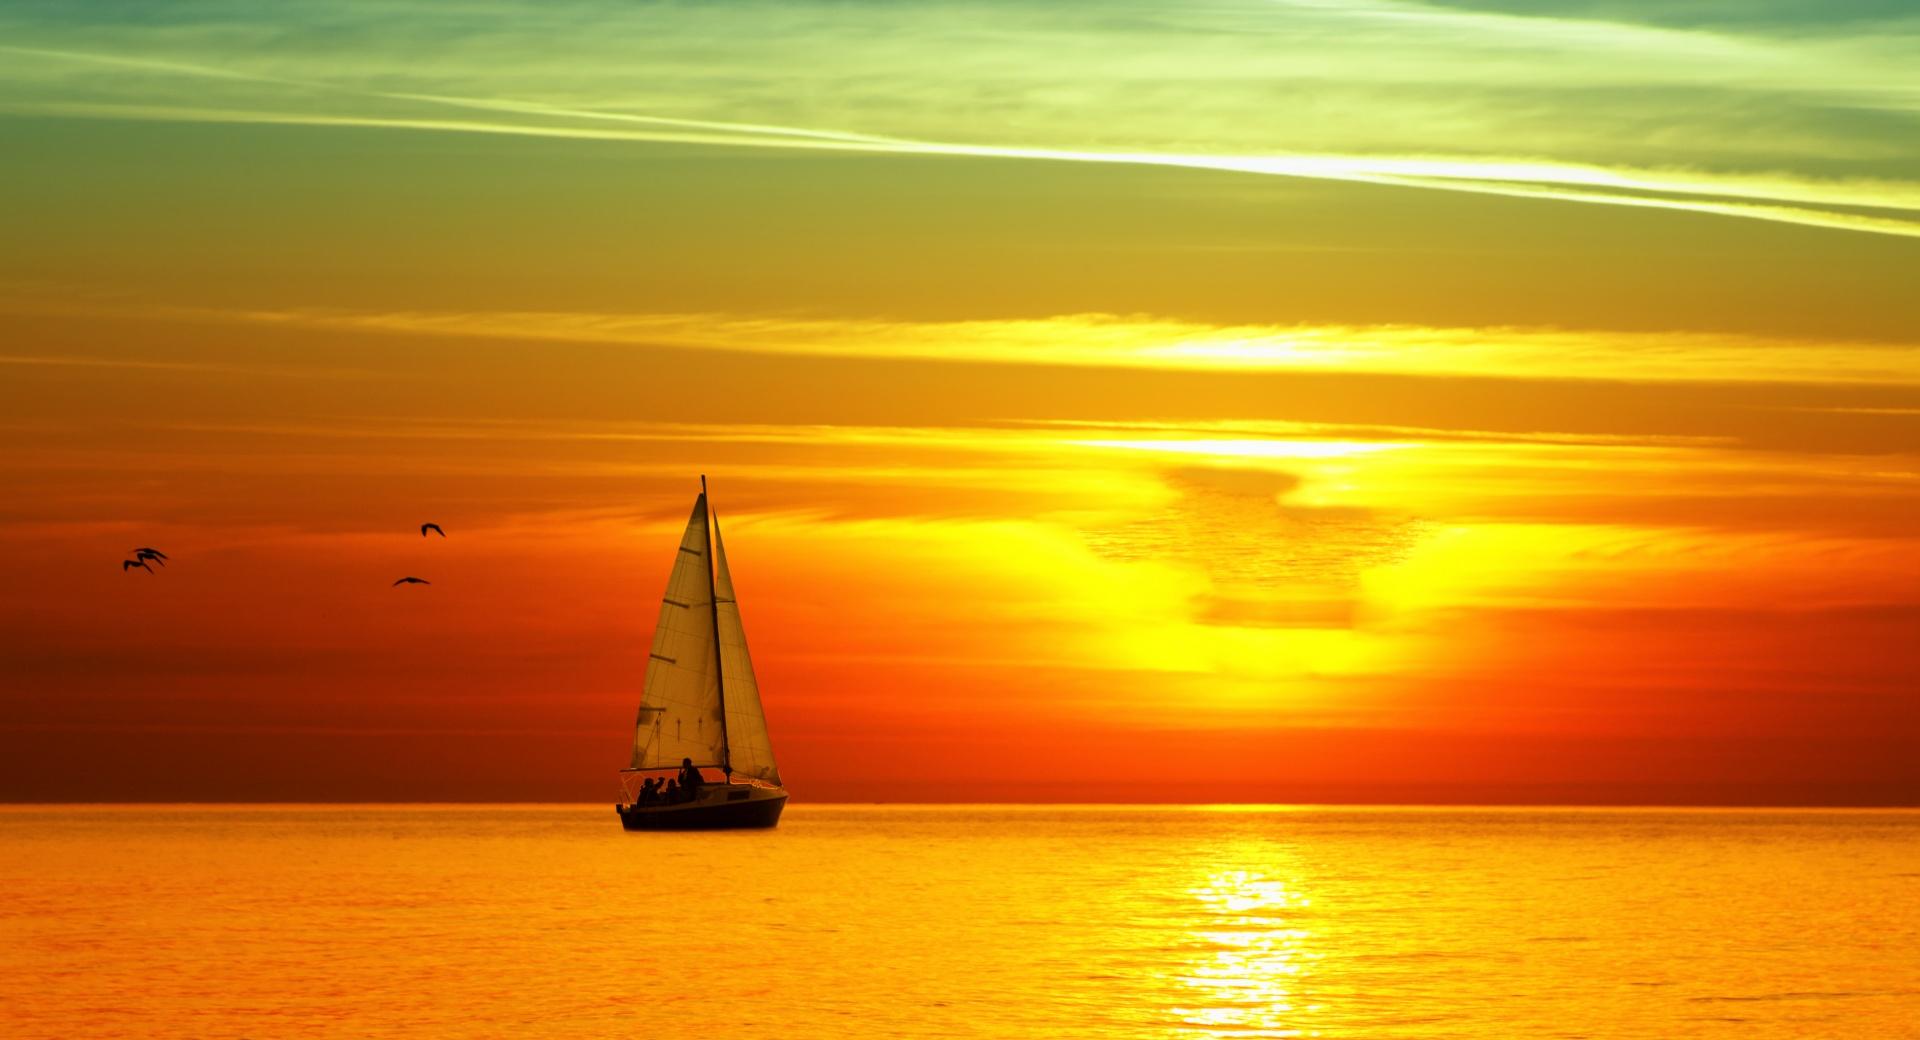 Sailing Boat At Sunset at 1024 x 1024 iPad size wallpapers HD quality